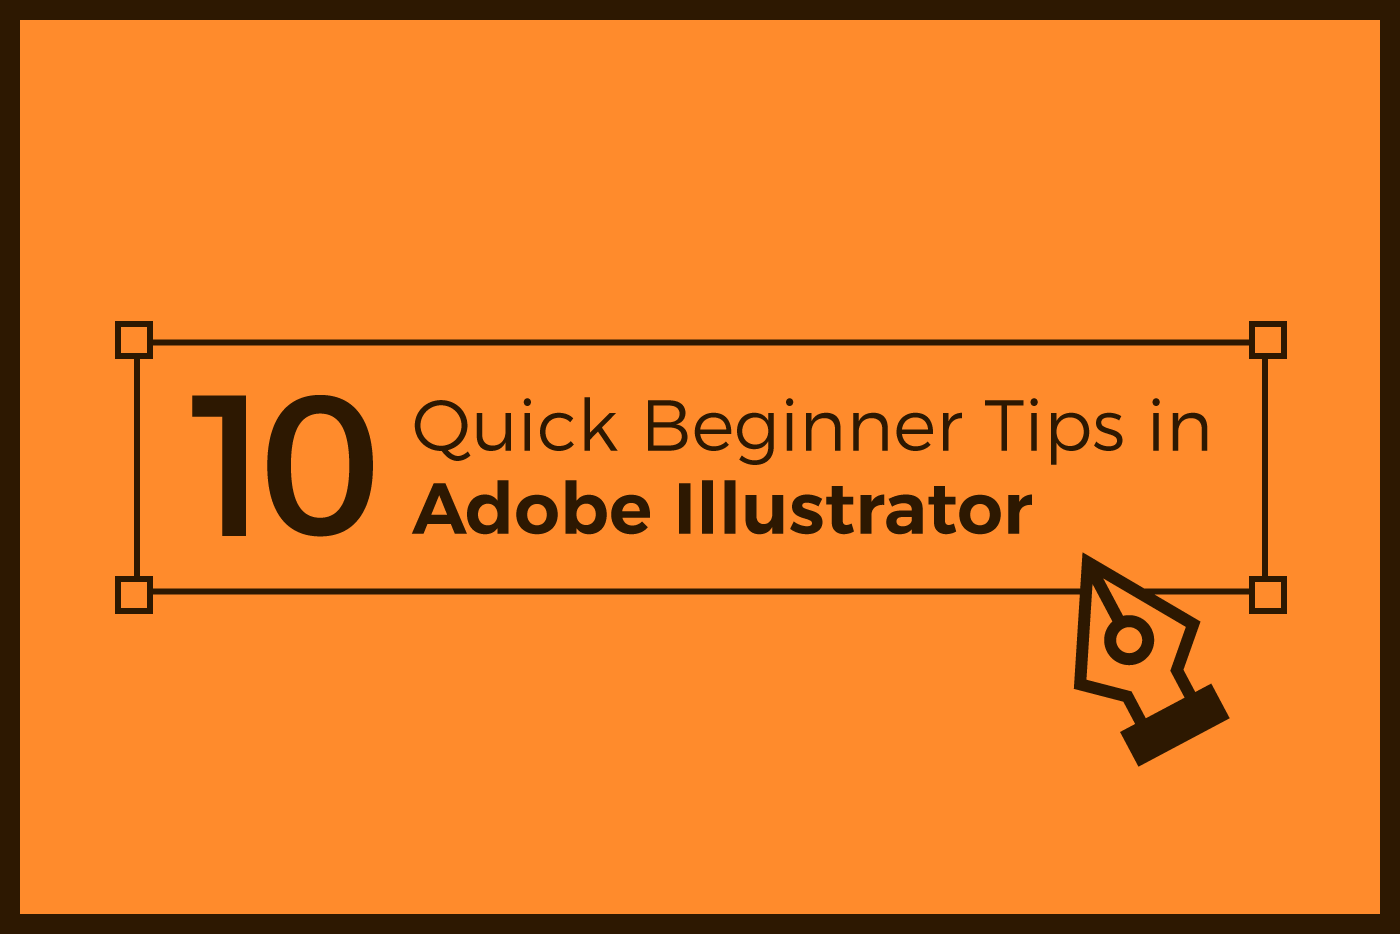 10 Quick Beginner Tips in Adobe Illustrator